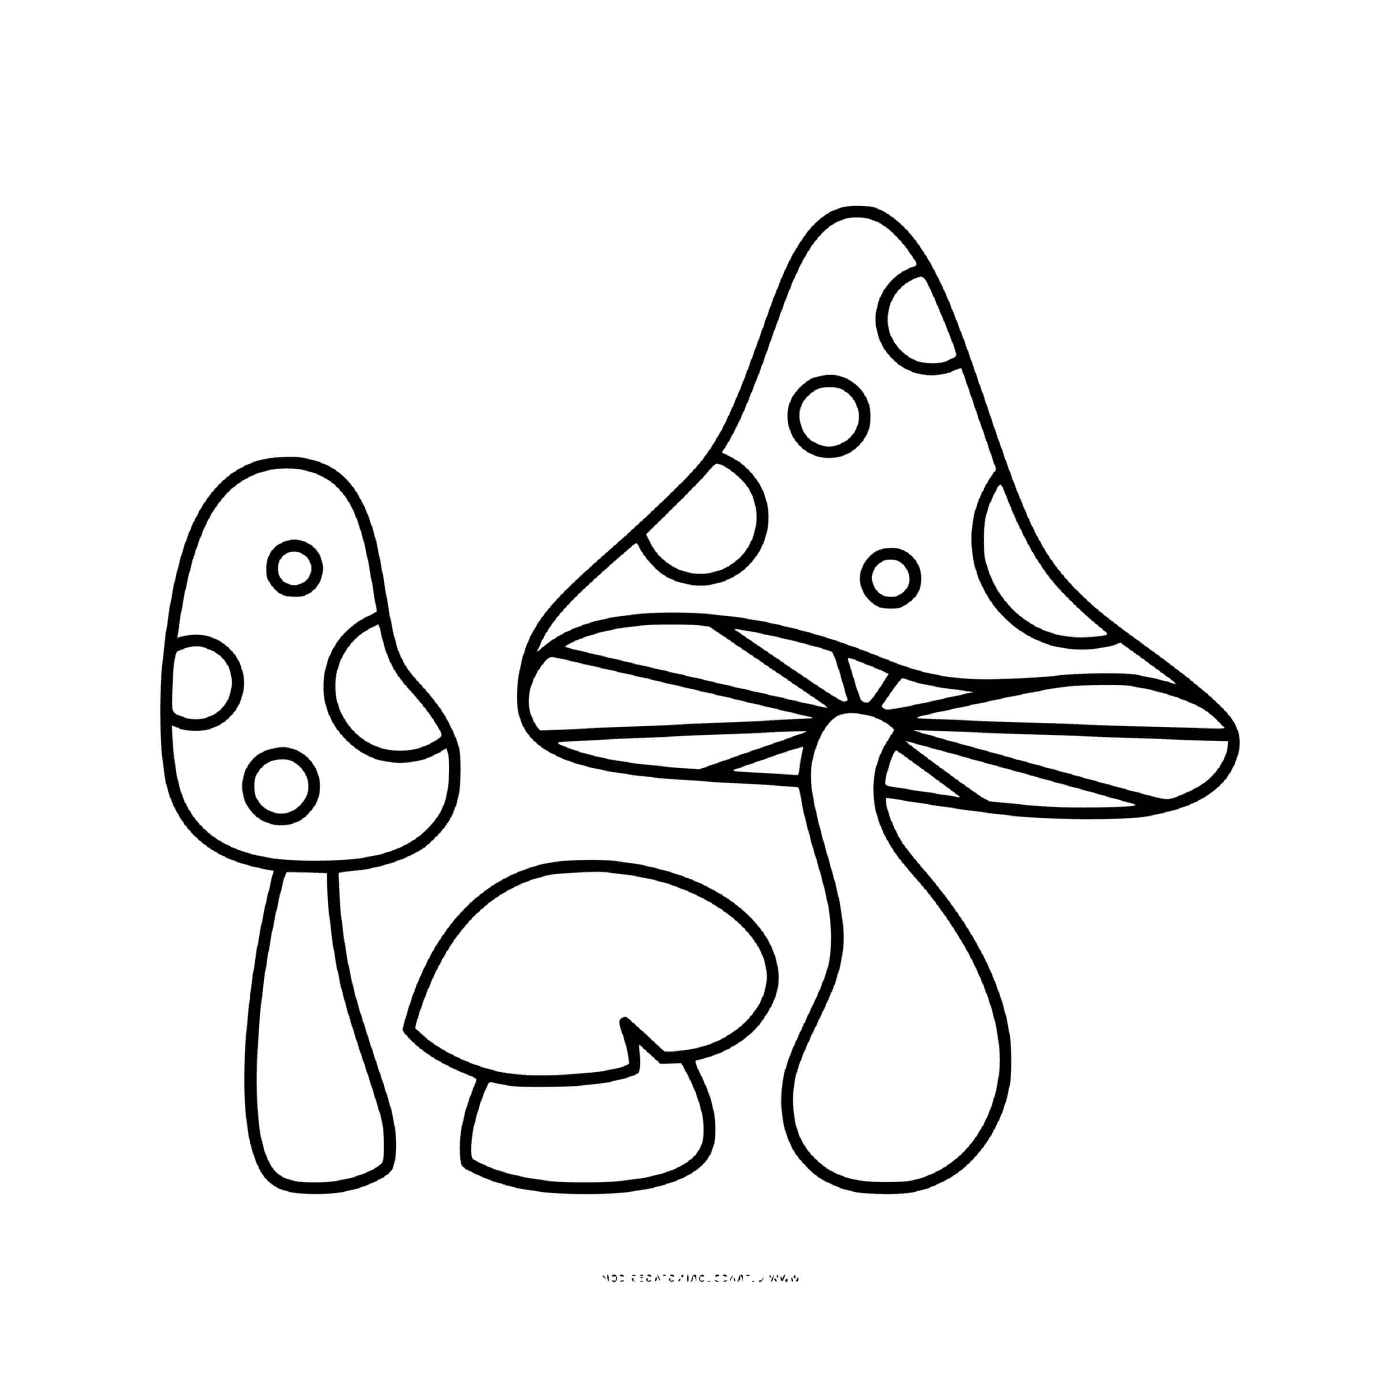  Various amanite mushrooms daffodil and phalloid 